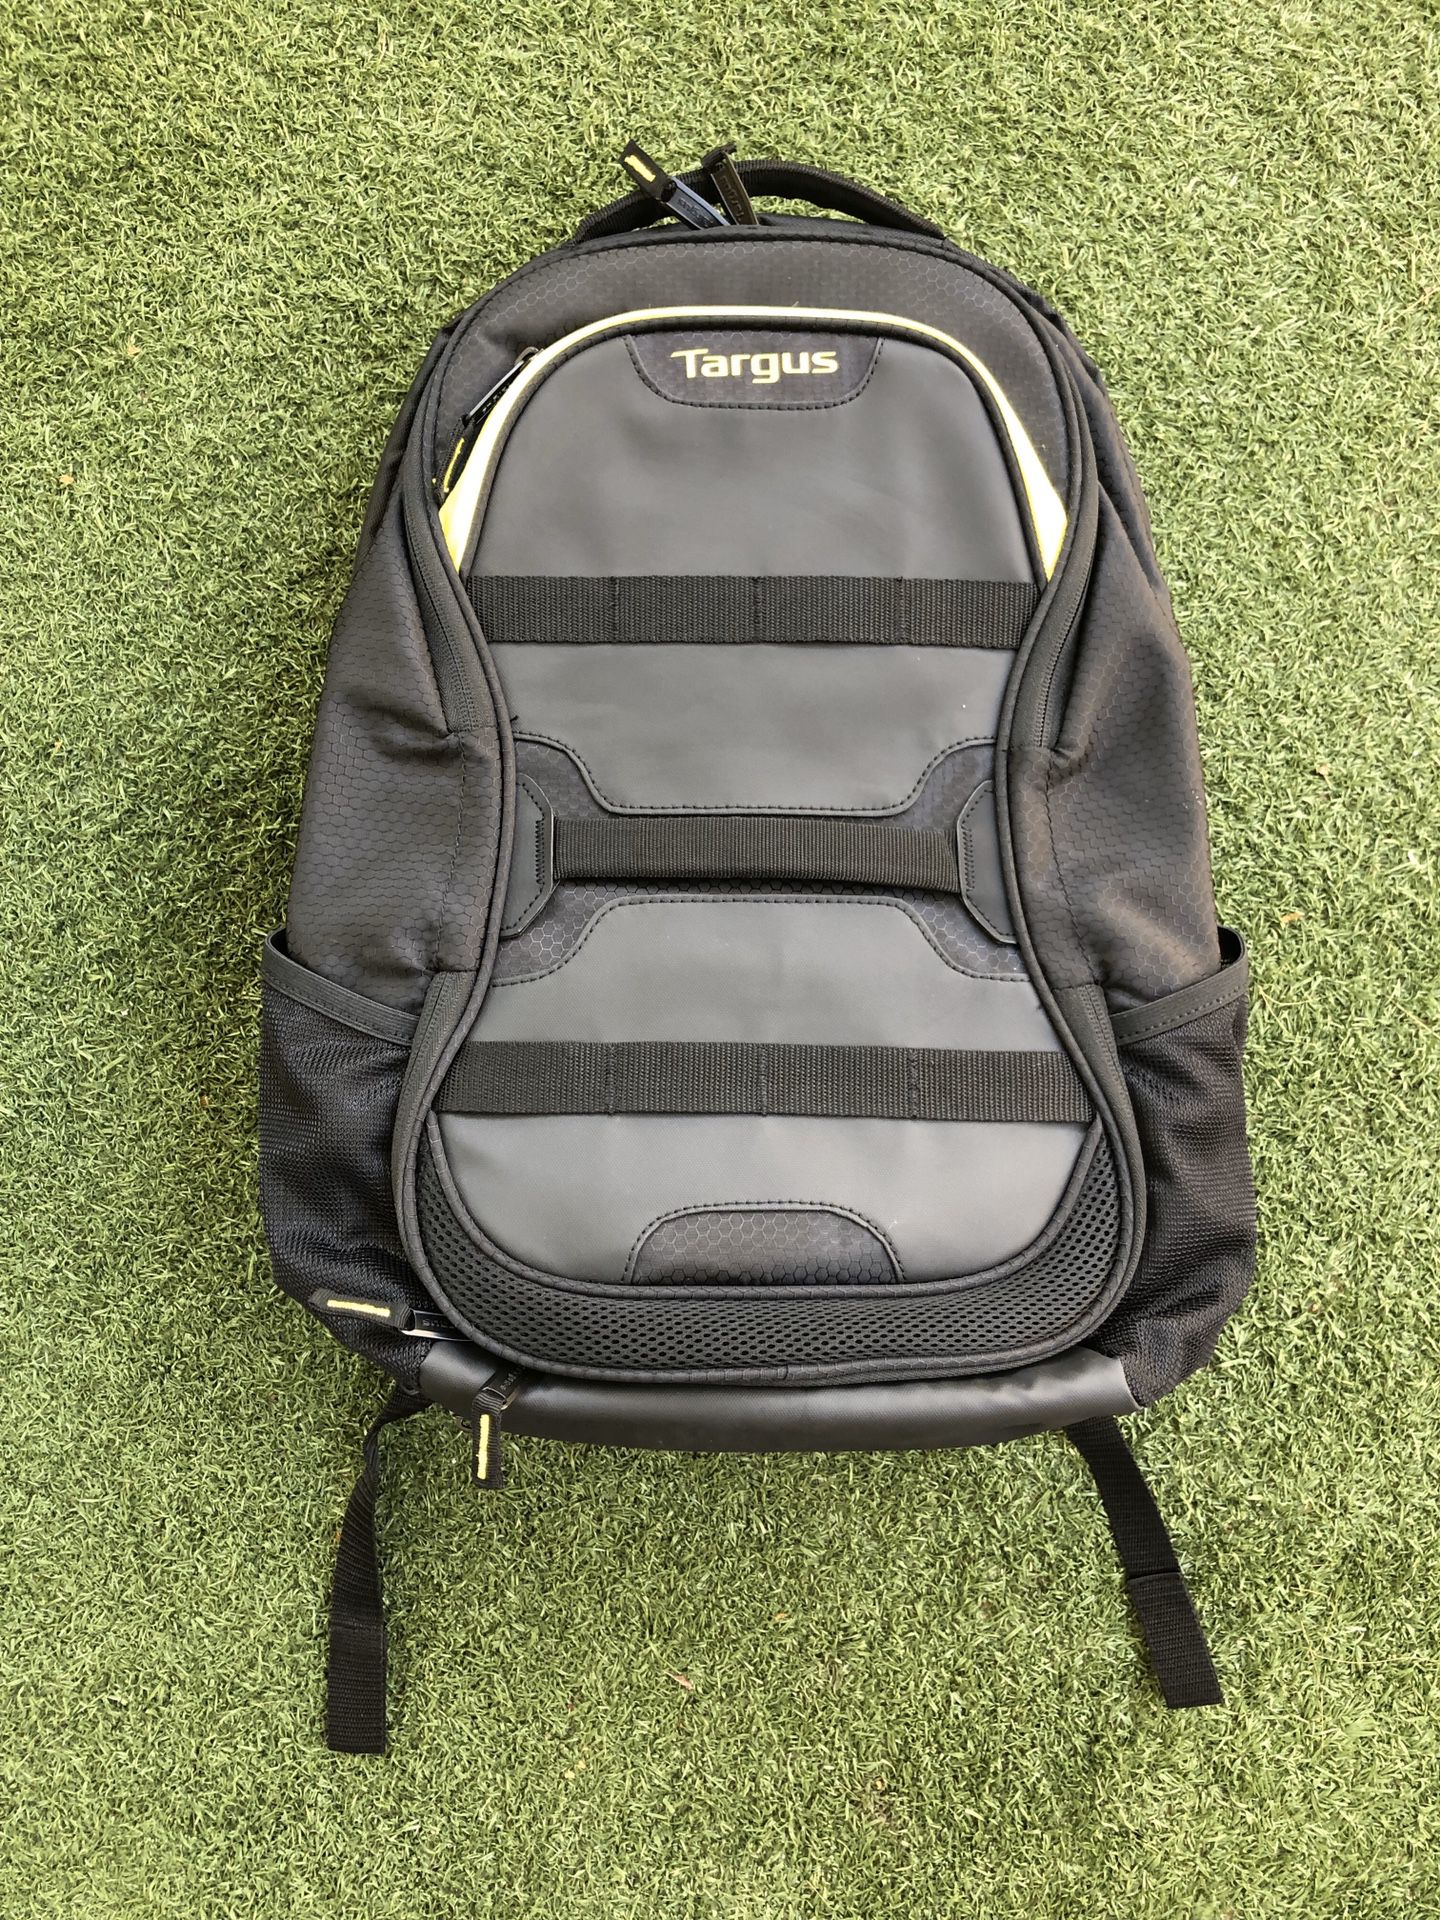 New Targus Electronics Backpack